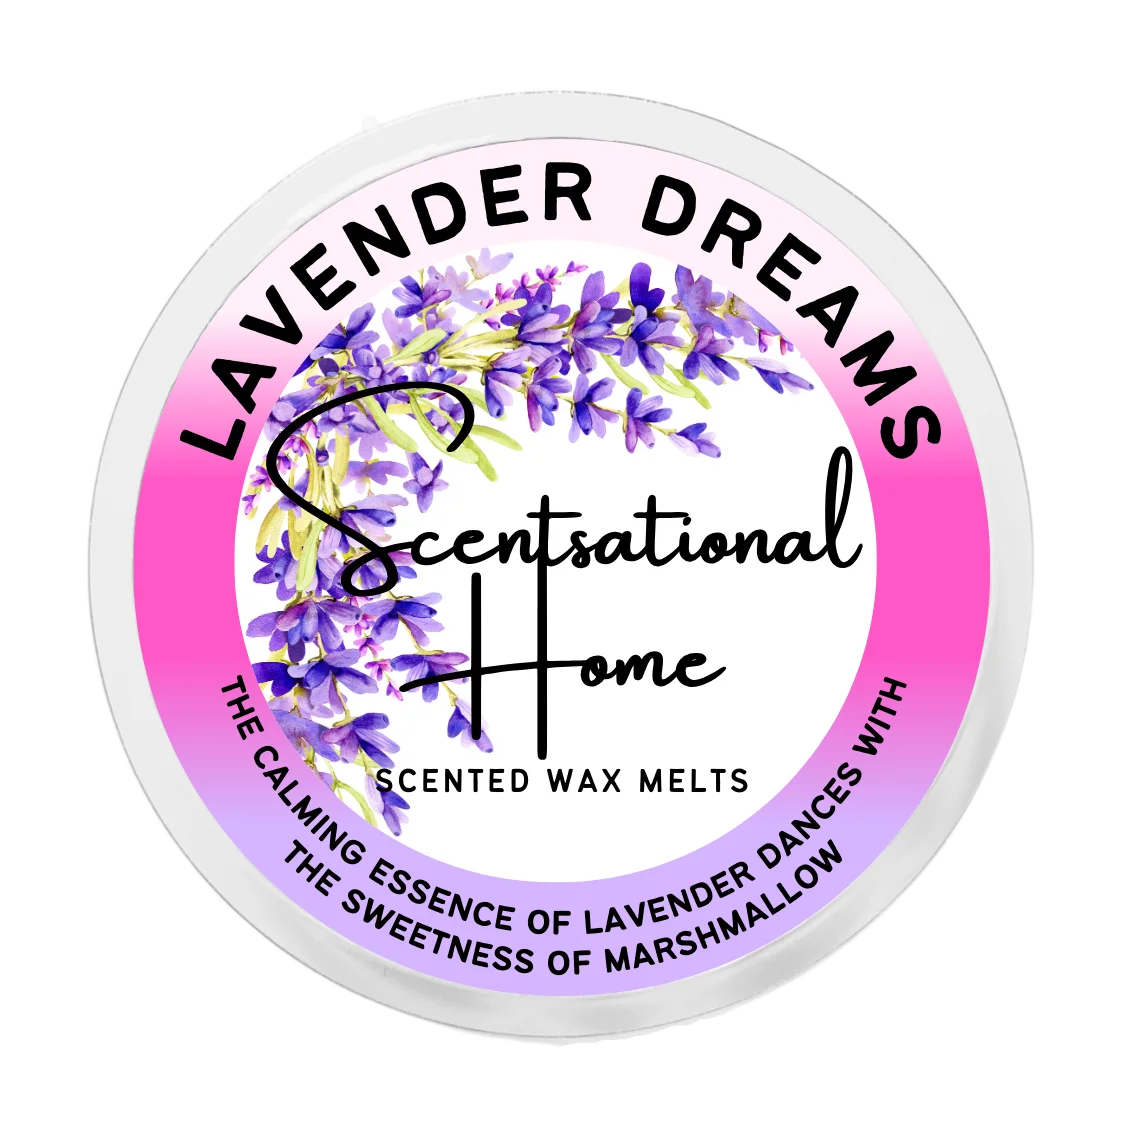 Lavender Dreams Wax Melt